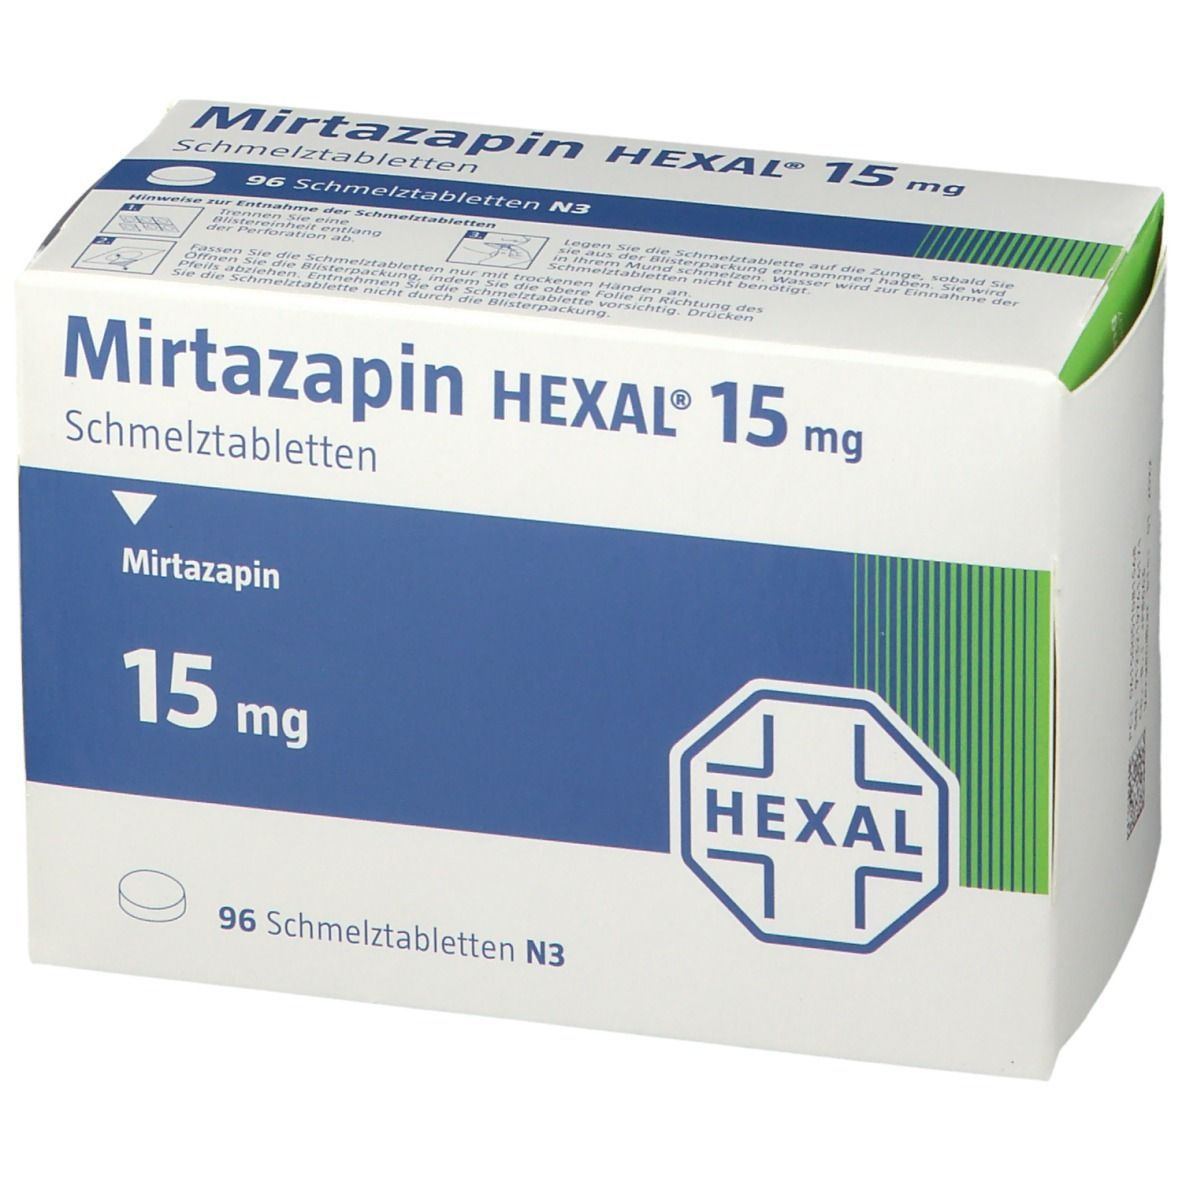 Mirtazapin HEXAL® 15 mg